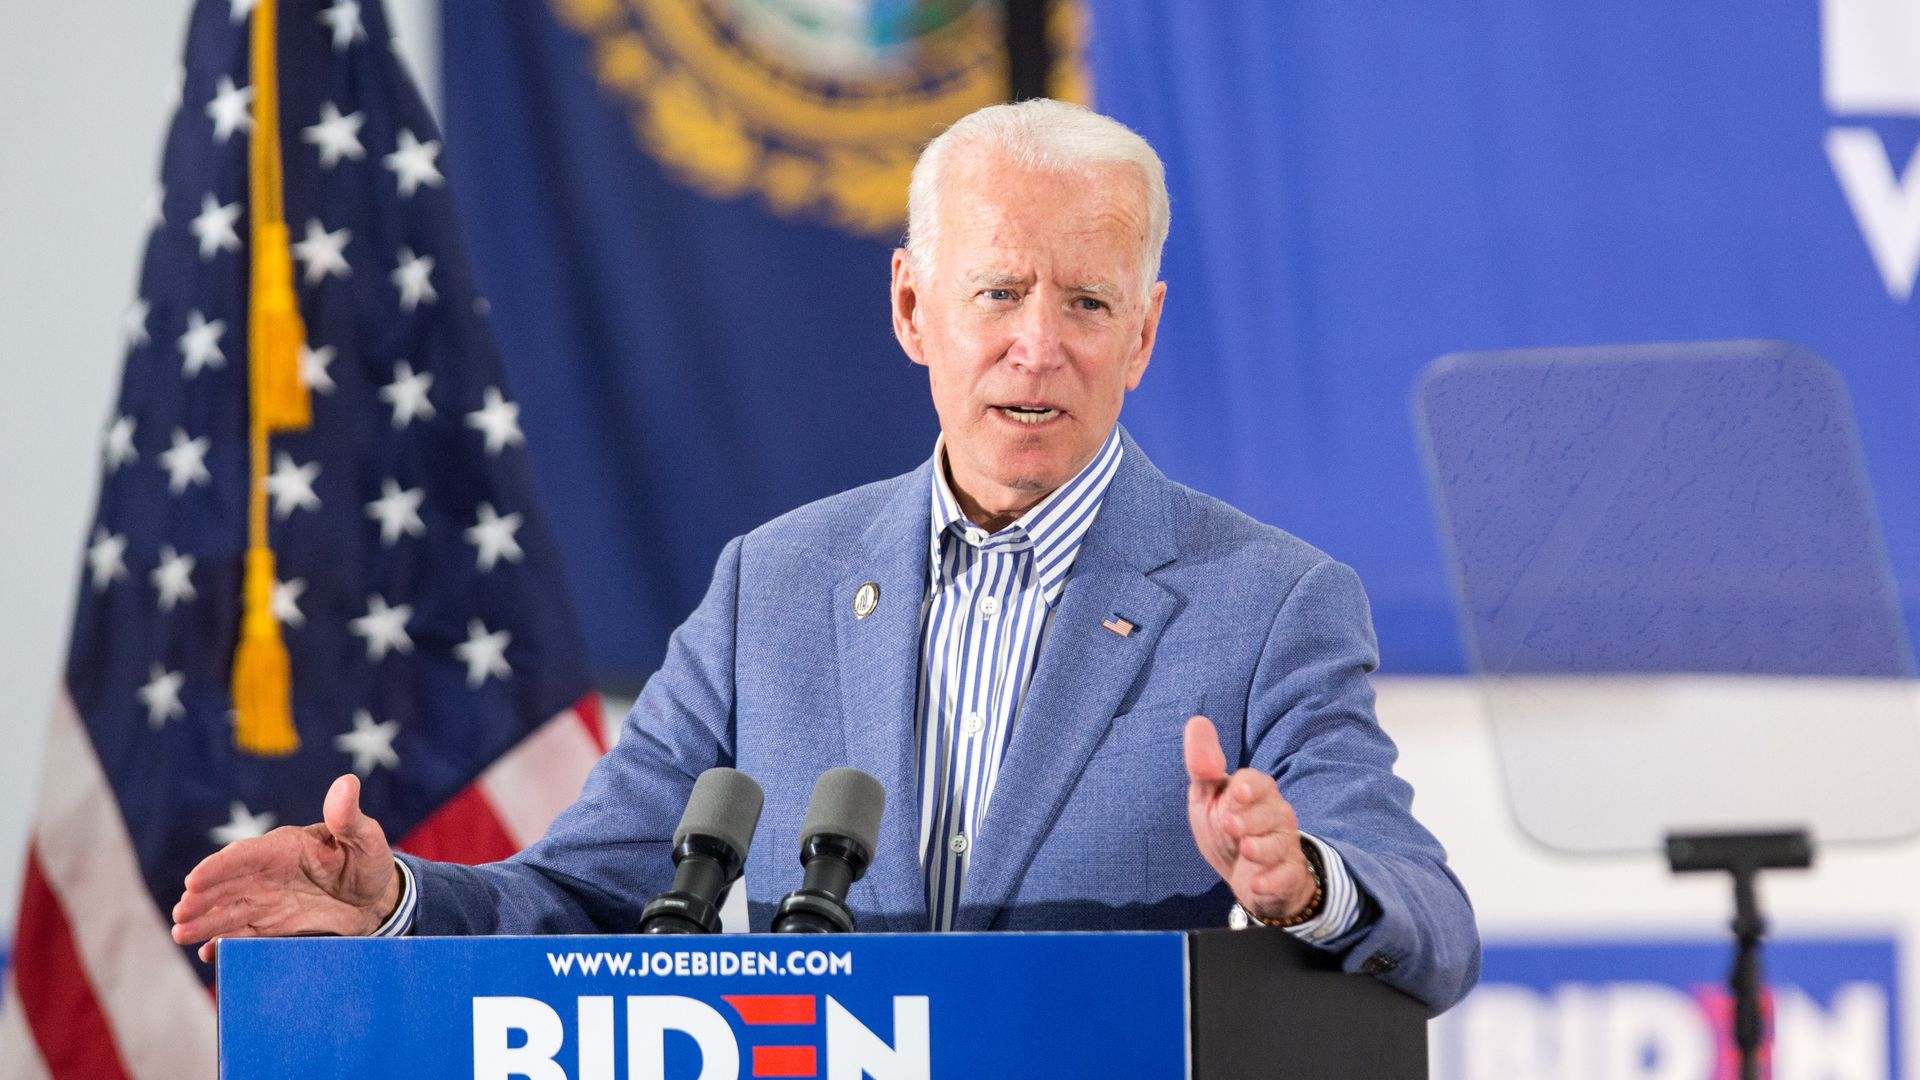 Joe Biden giving a speech in New Hampshire